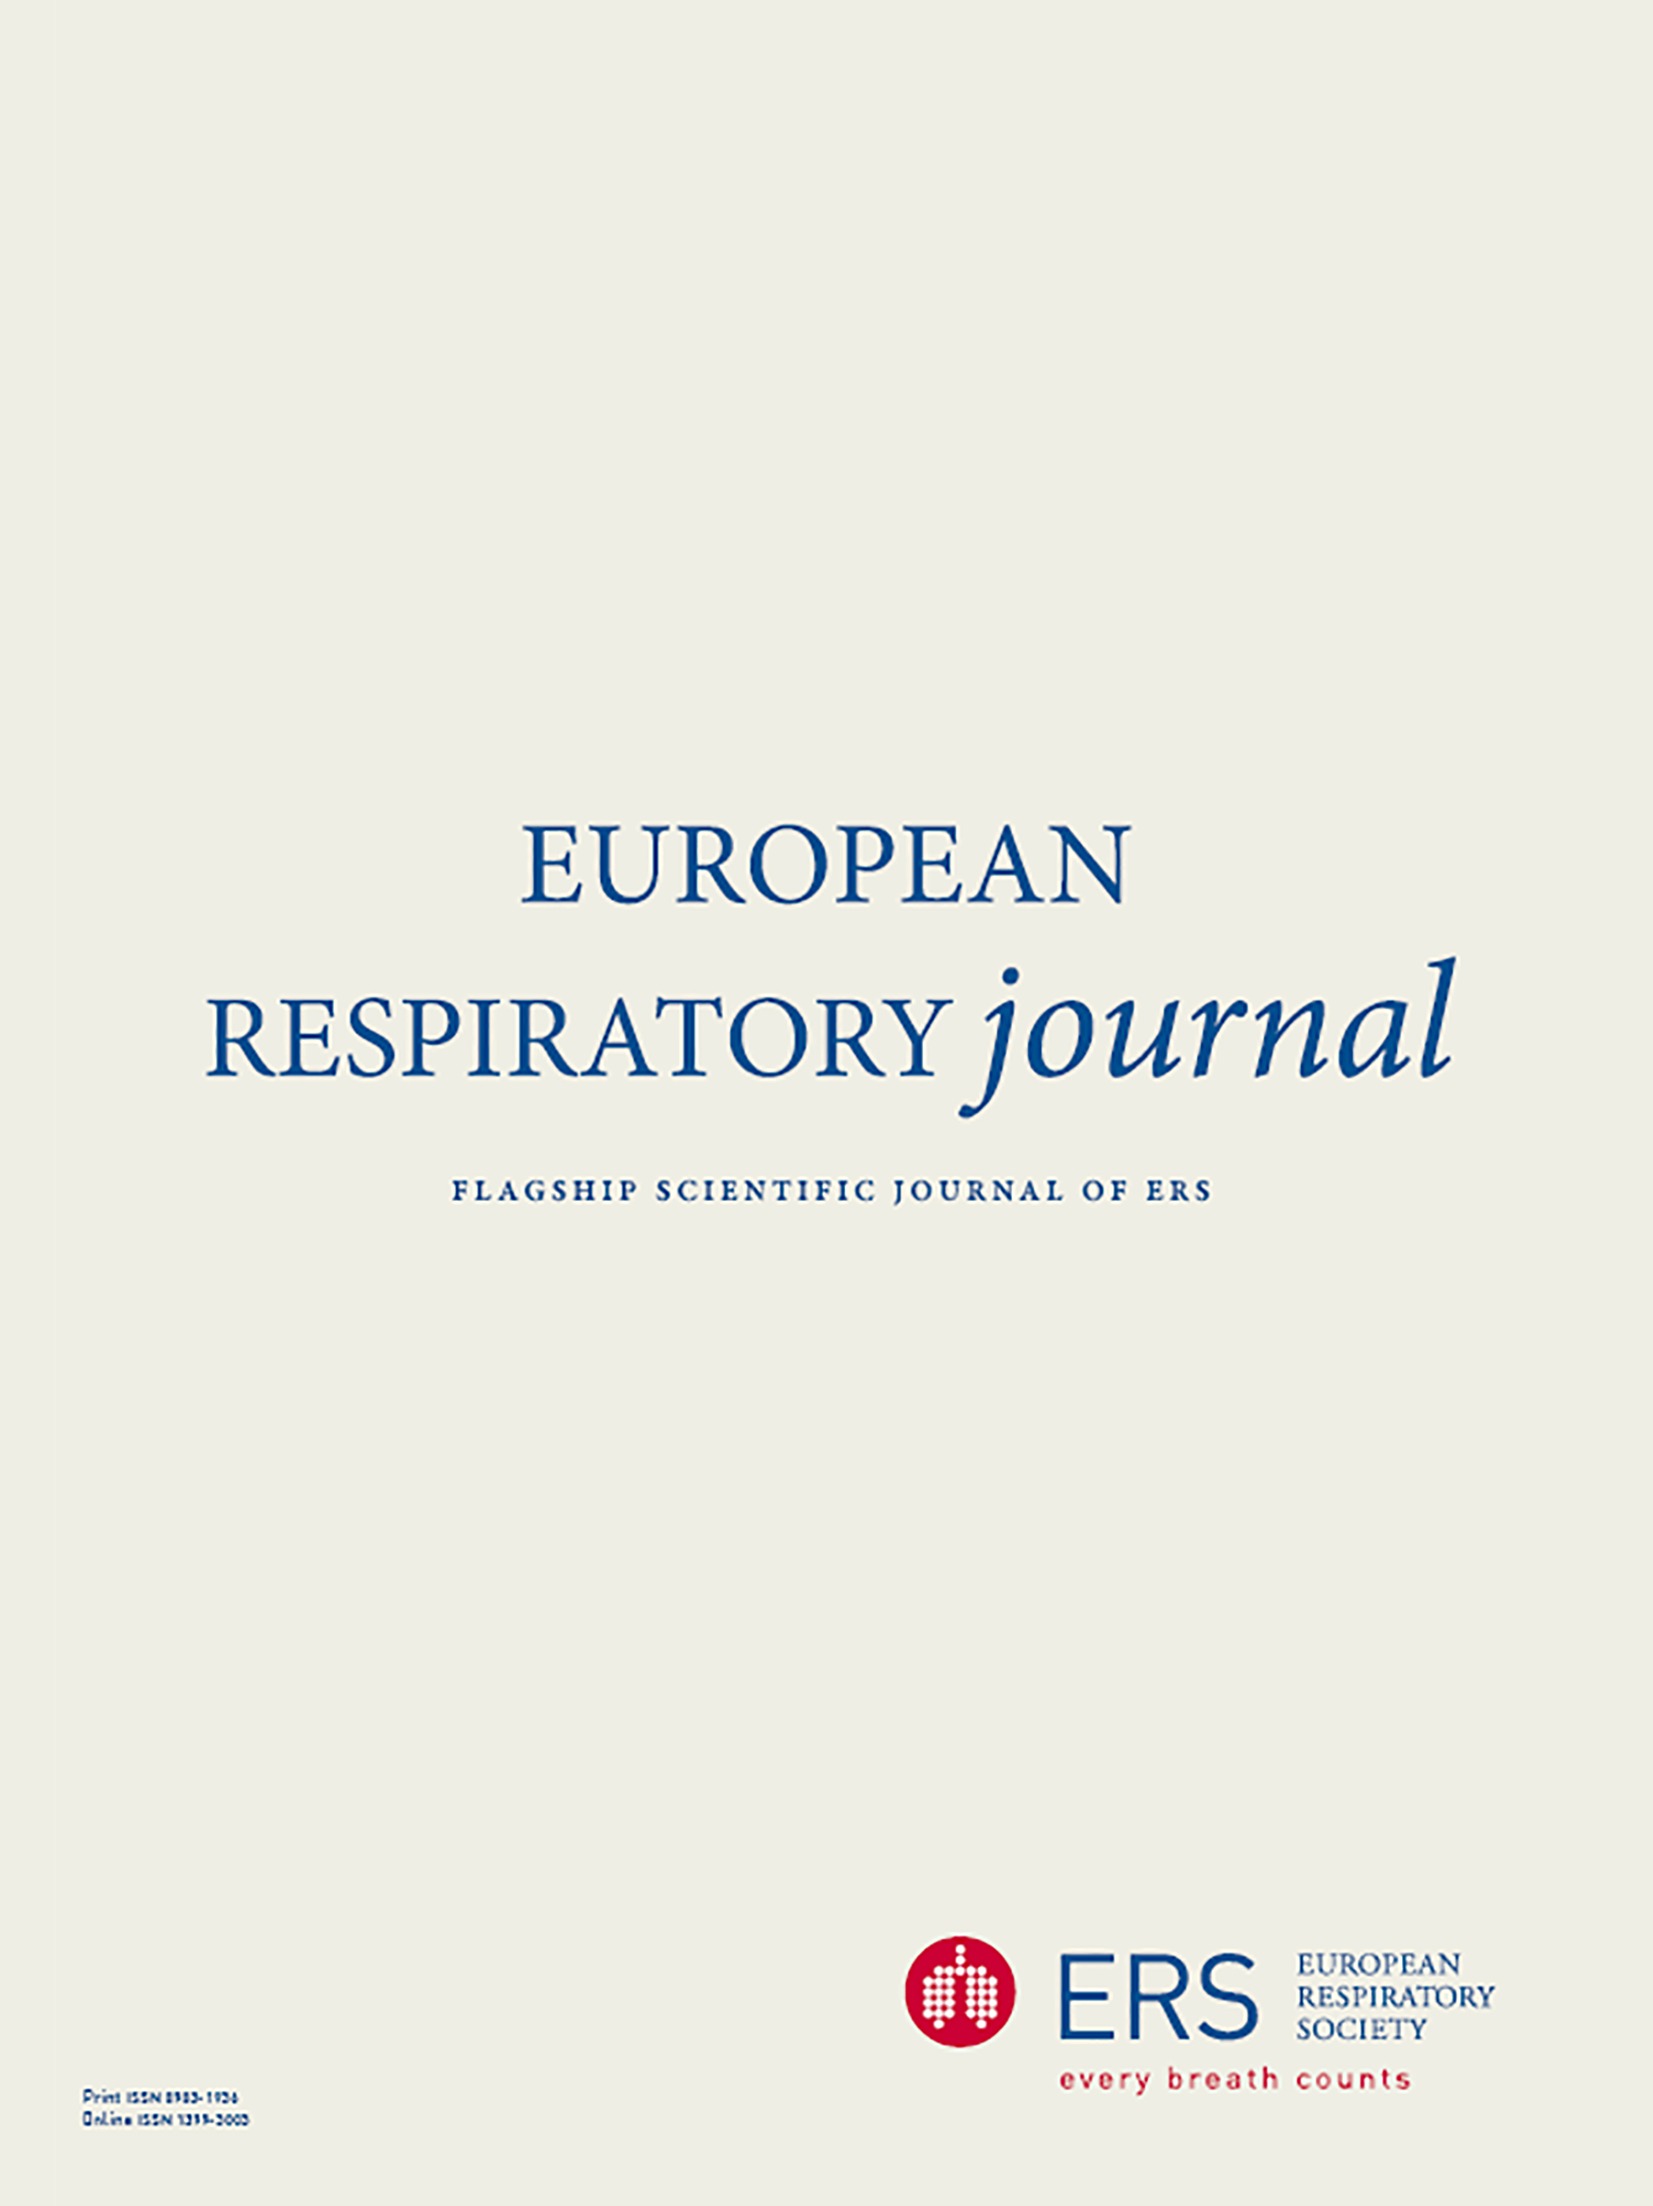 Performance of the ESC/ERS 4-strata risk stratification model for pulmonary arterial hypertension with missing variables